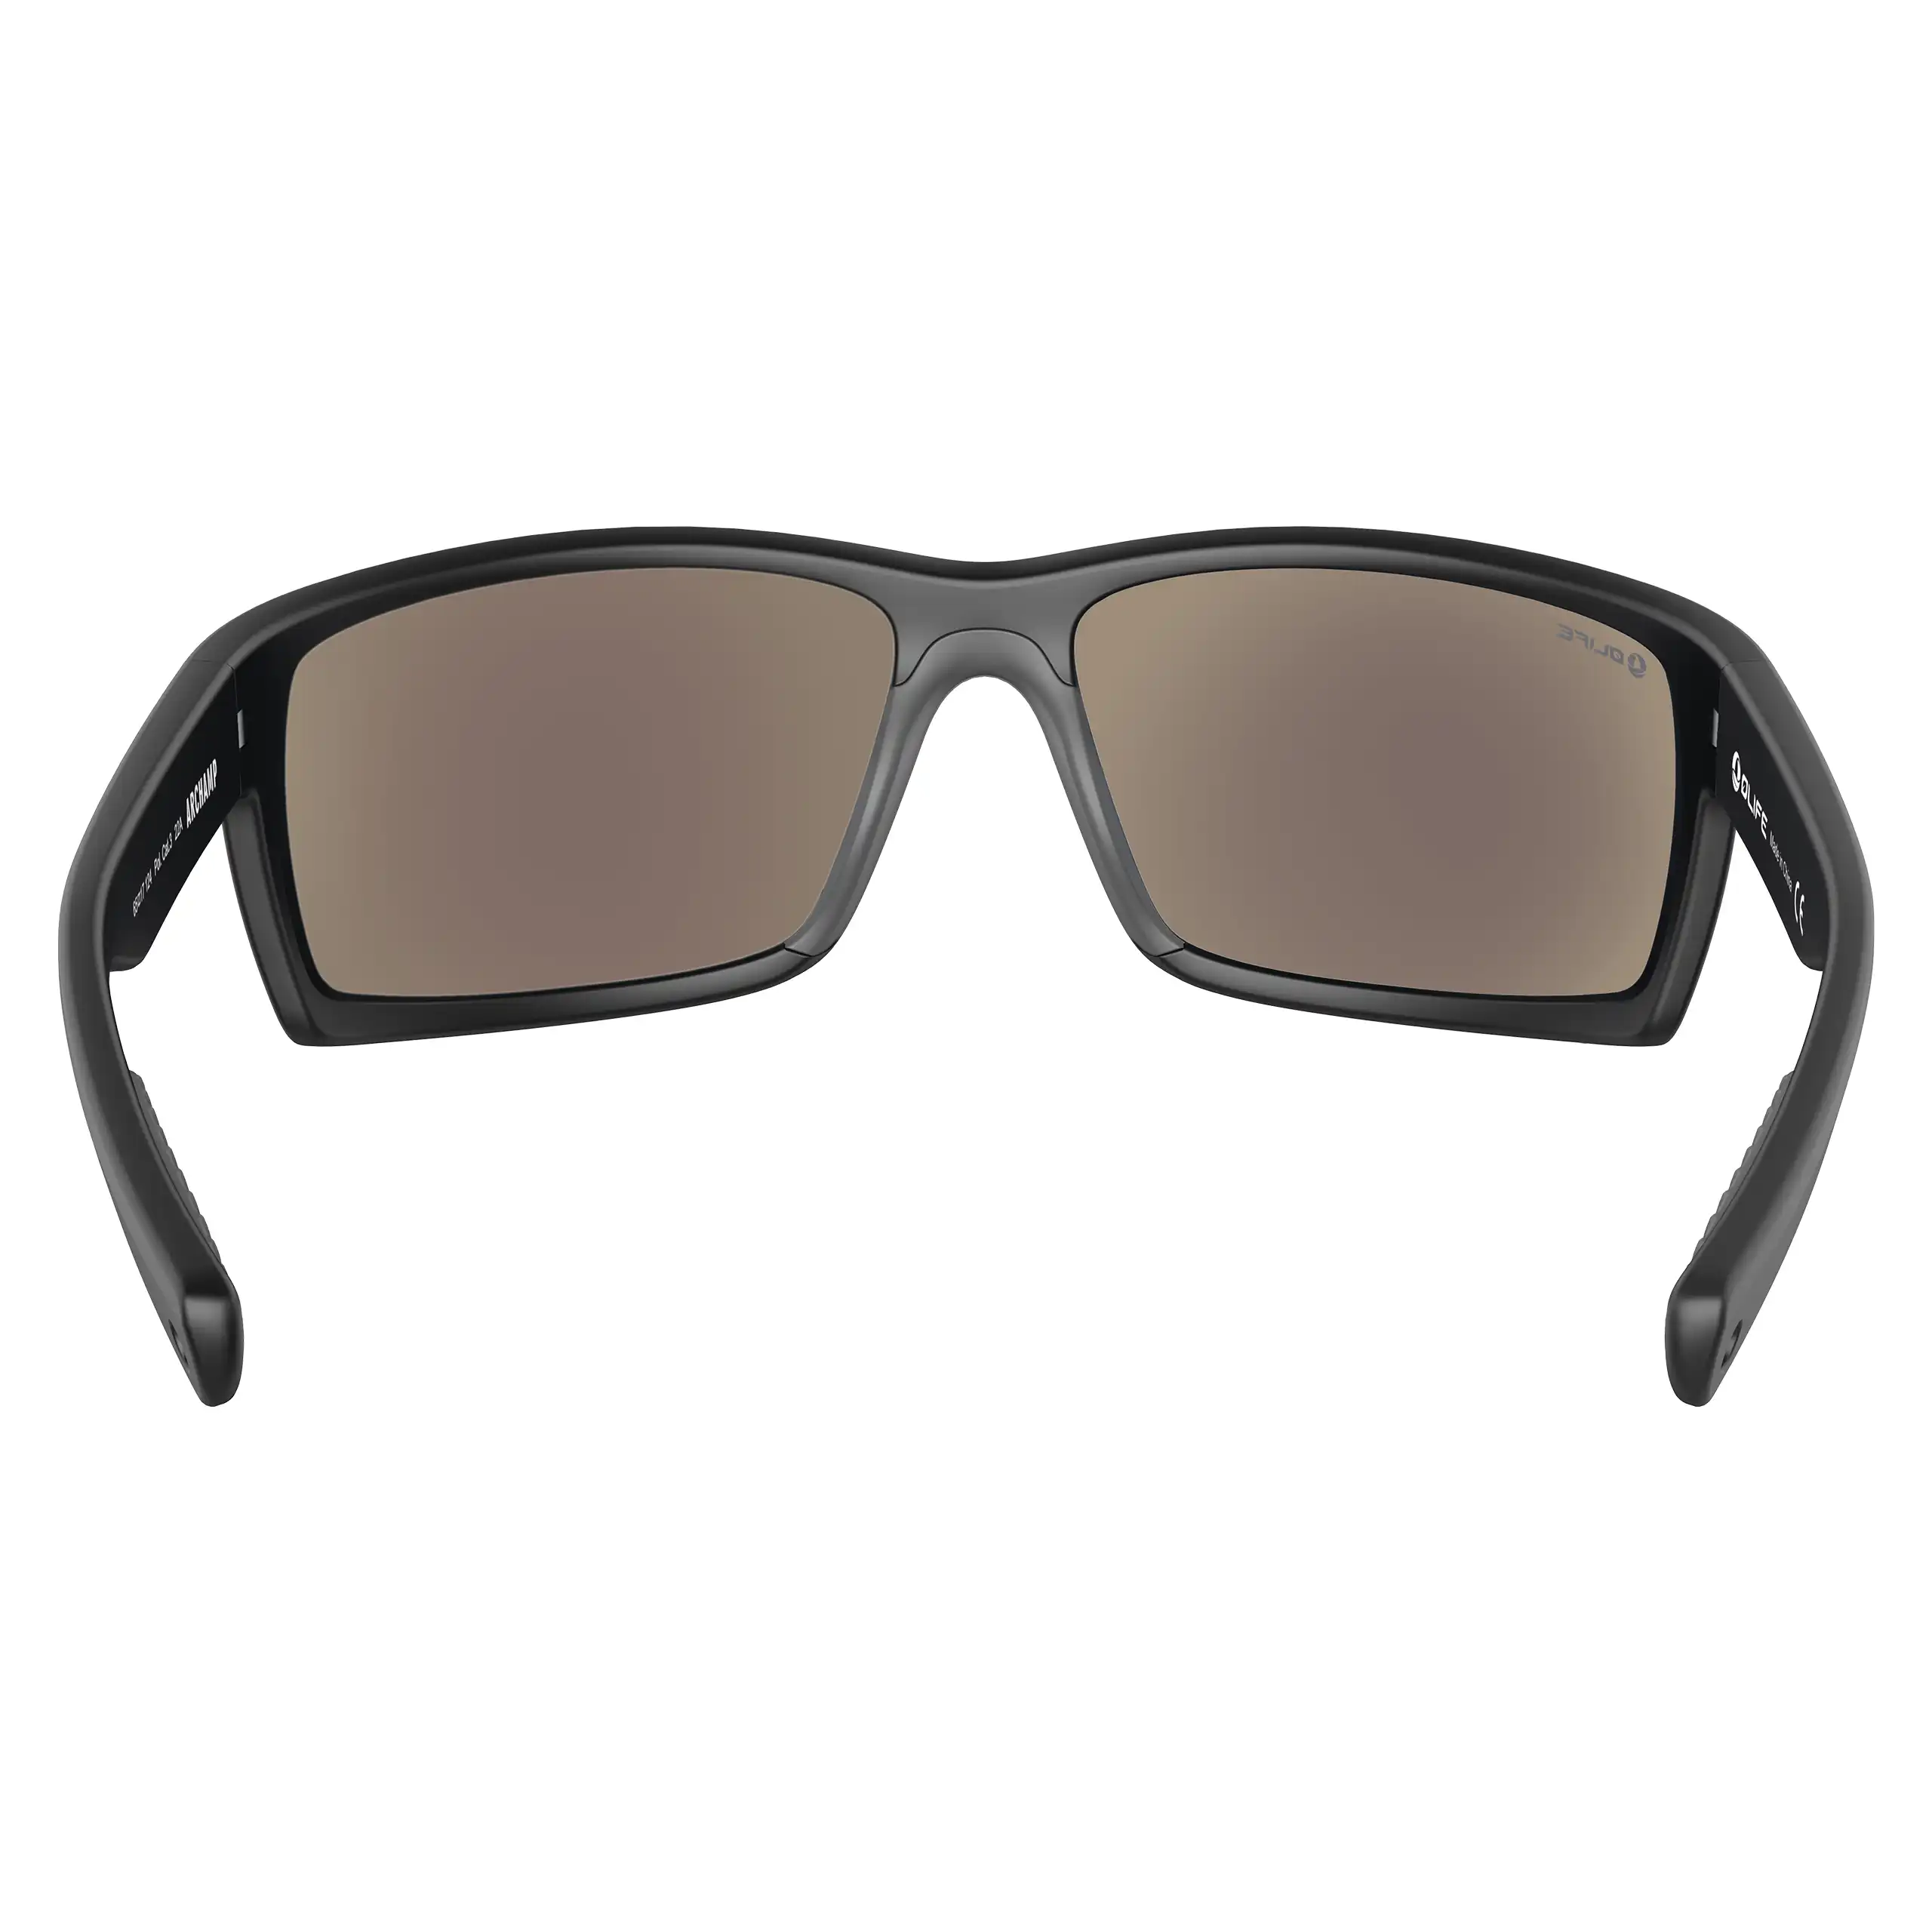 OLIFE Archamp Men's Polarized Casual Sunglasses